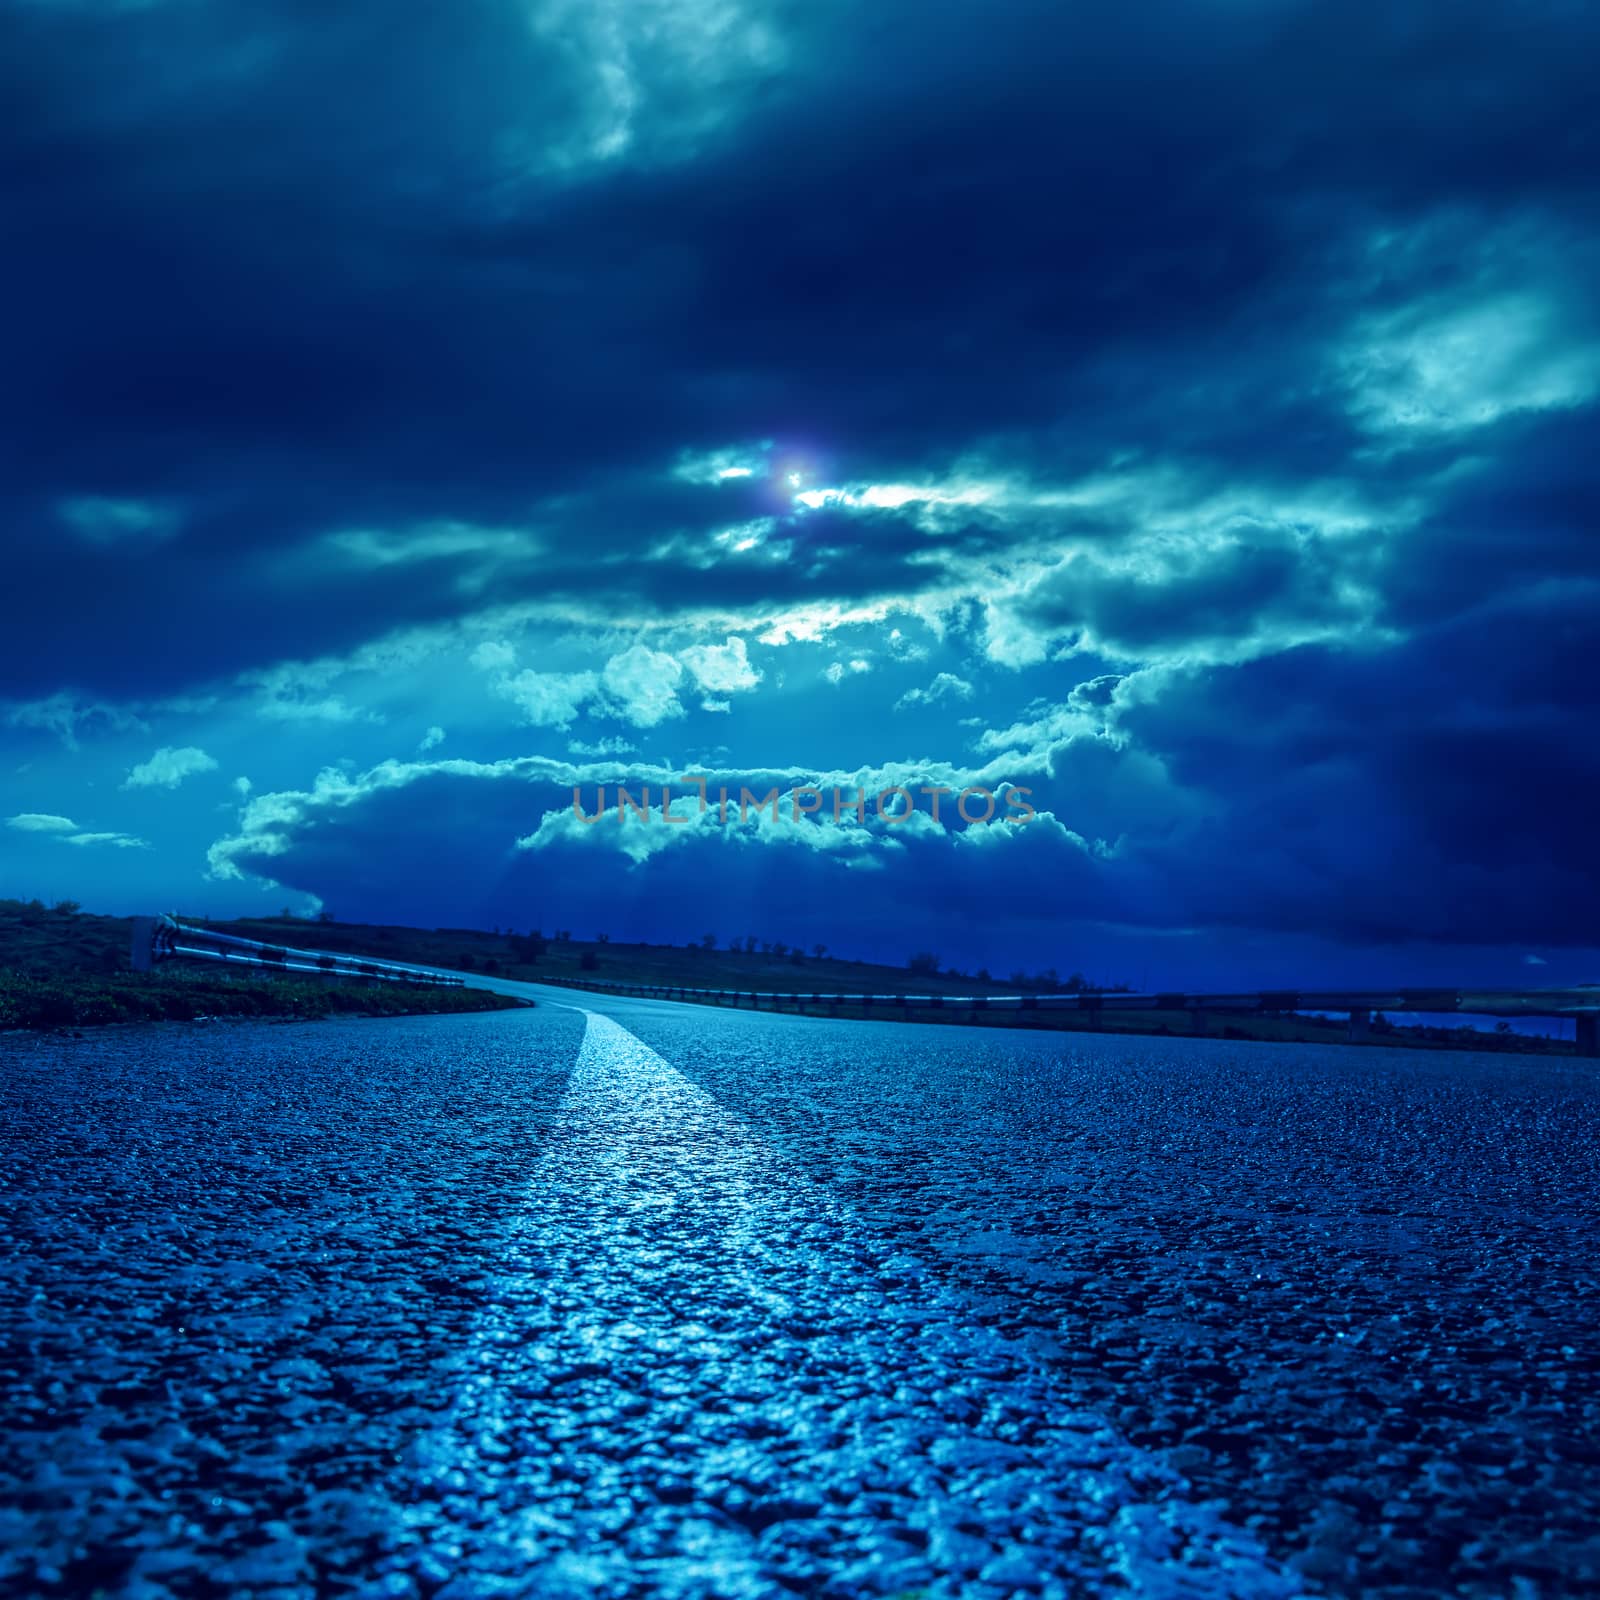 low dramatic clouds over asphalt road in dark blue moonlight